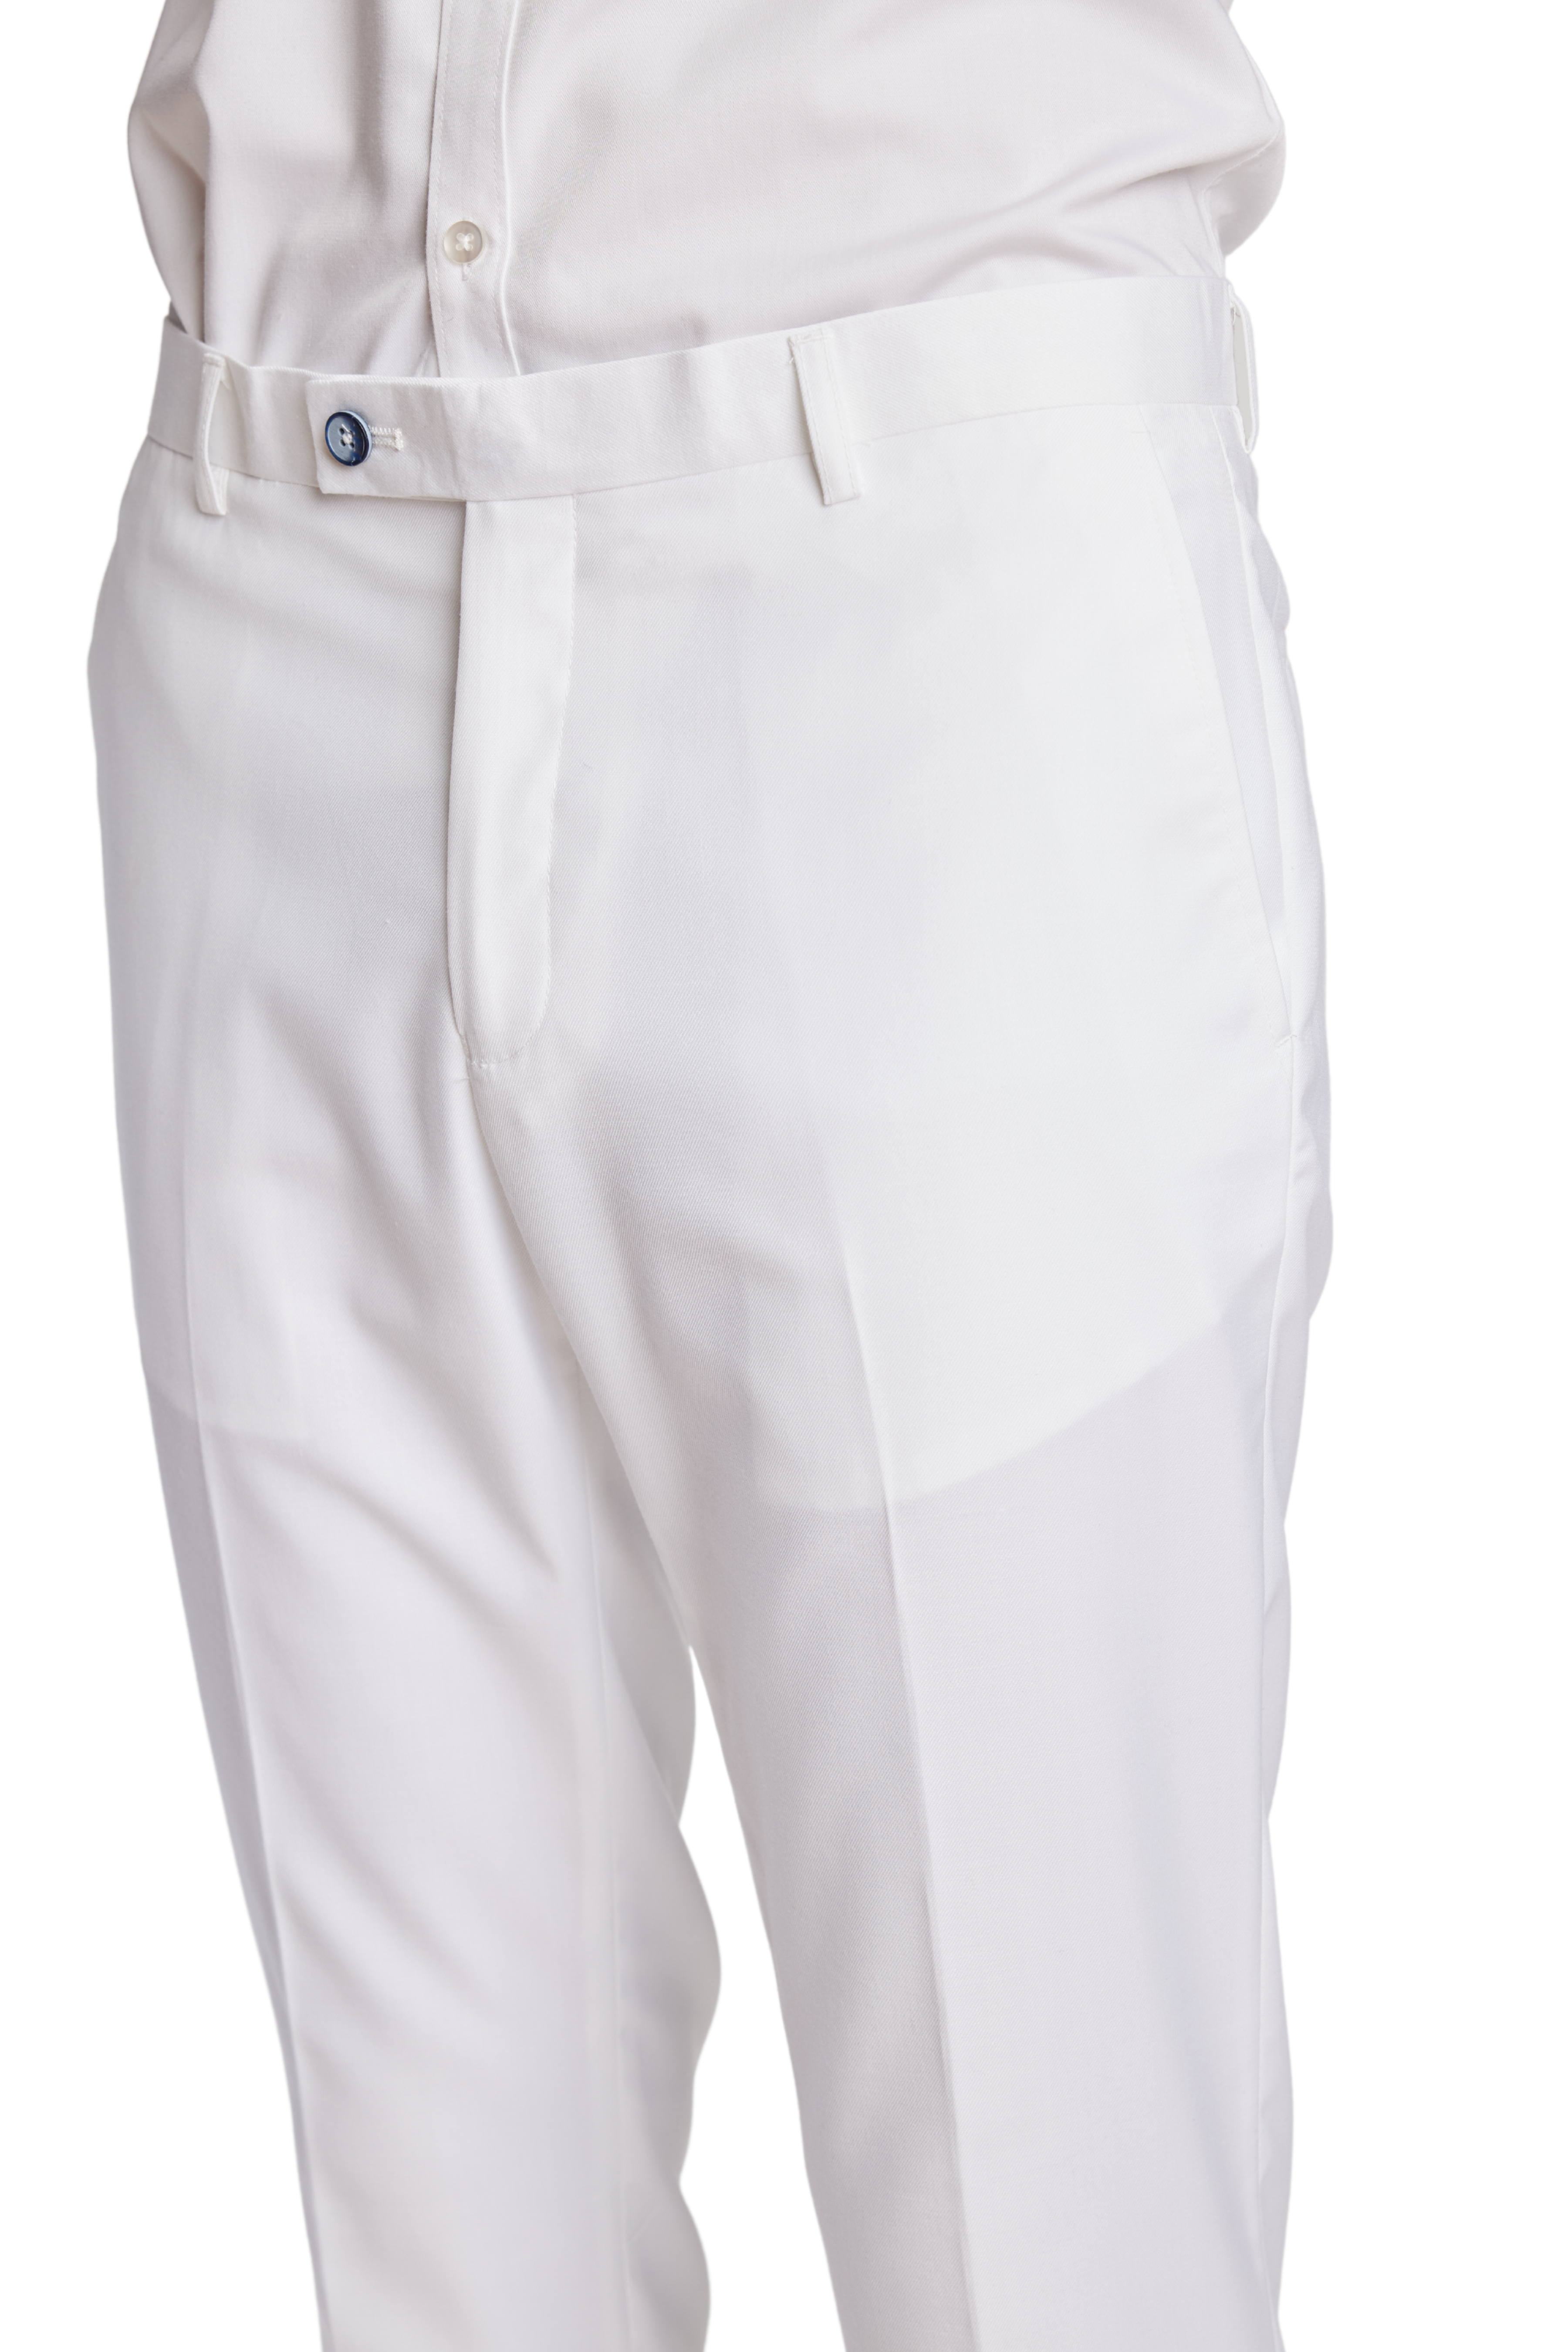 downing pants - slim - new white